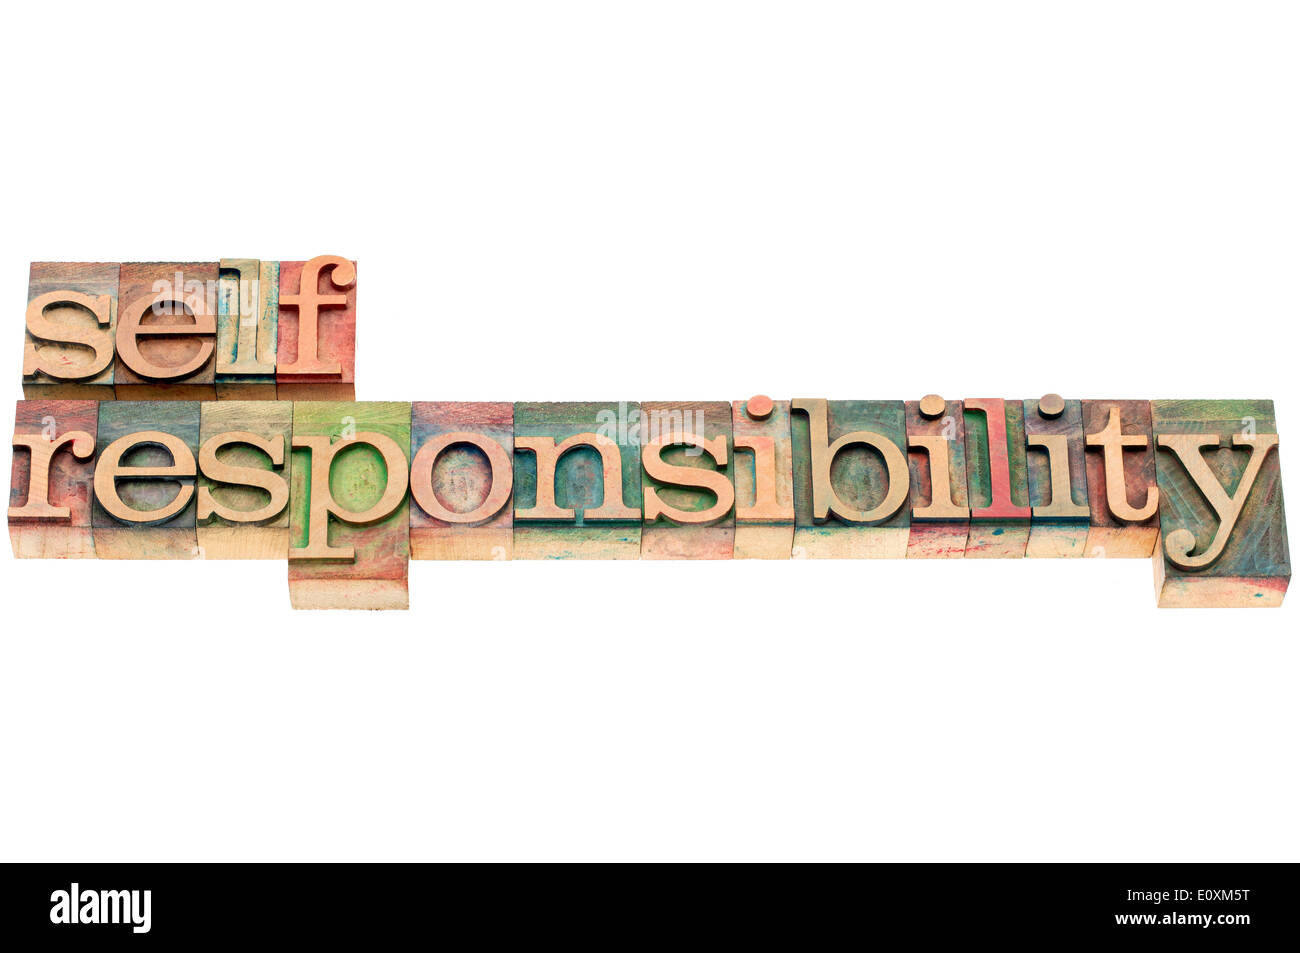 selfresponsibility word in letterpress wood type printing blocks Stock Photo